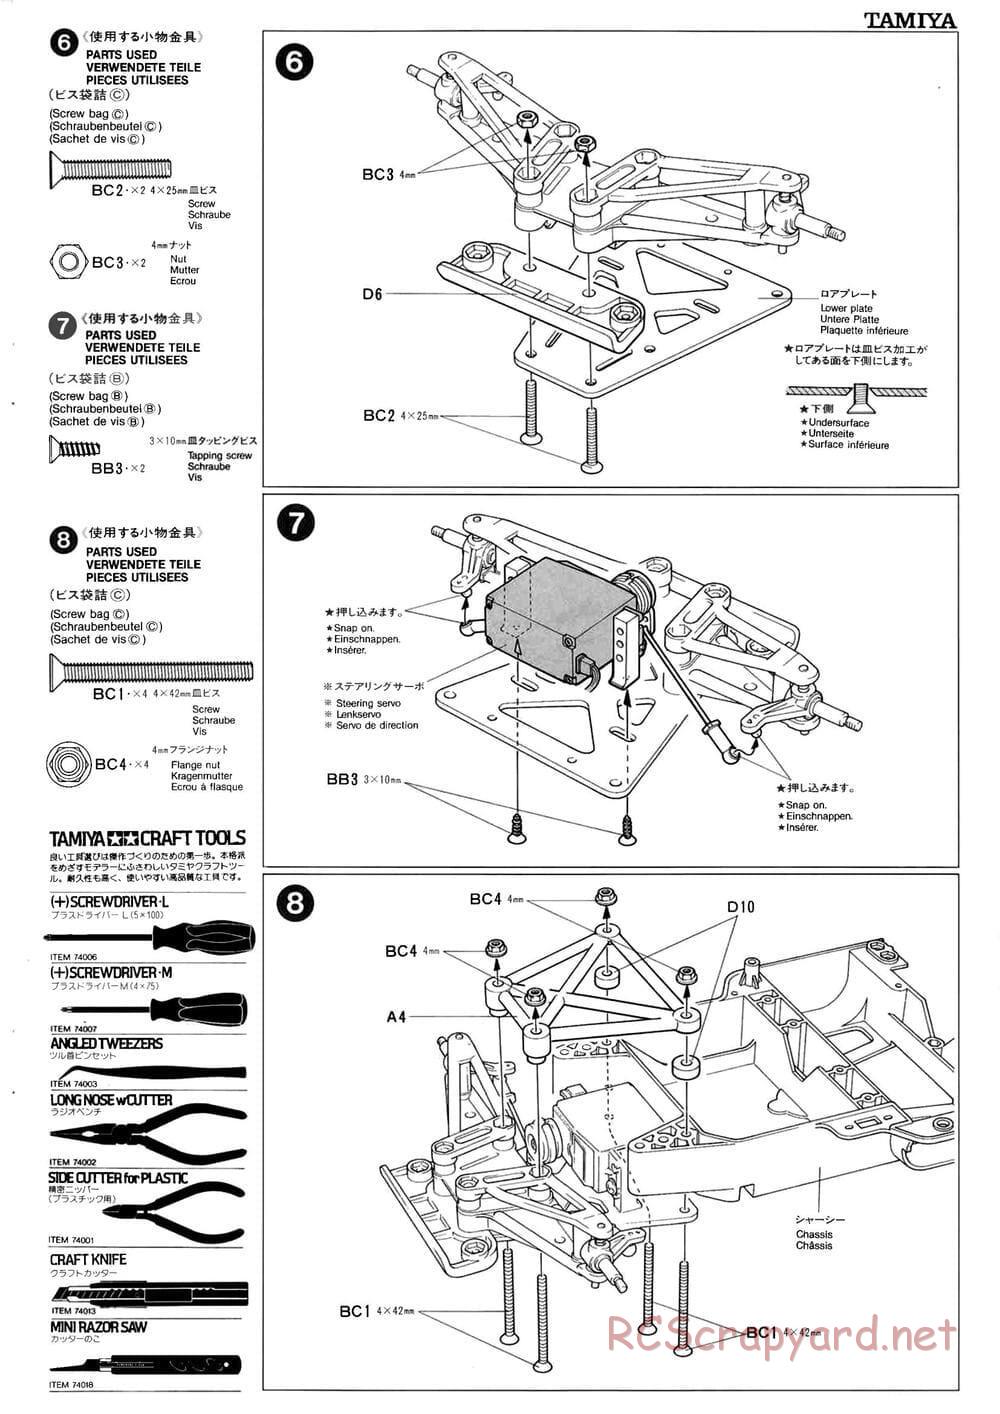 Tamiya - Group-C Chassis - Manual - Page 7